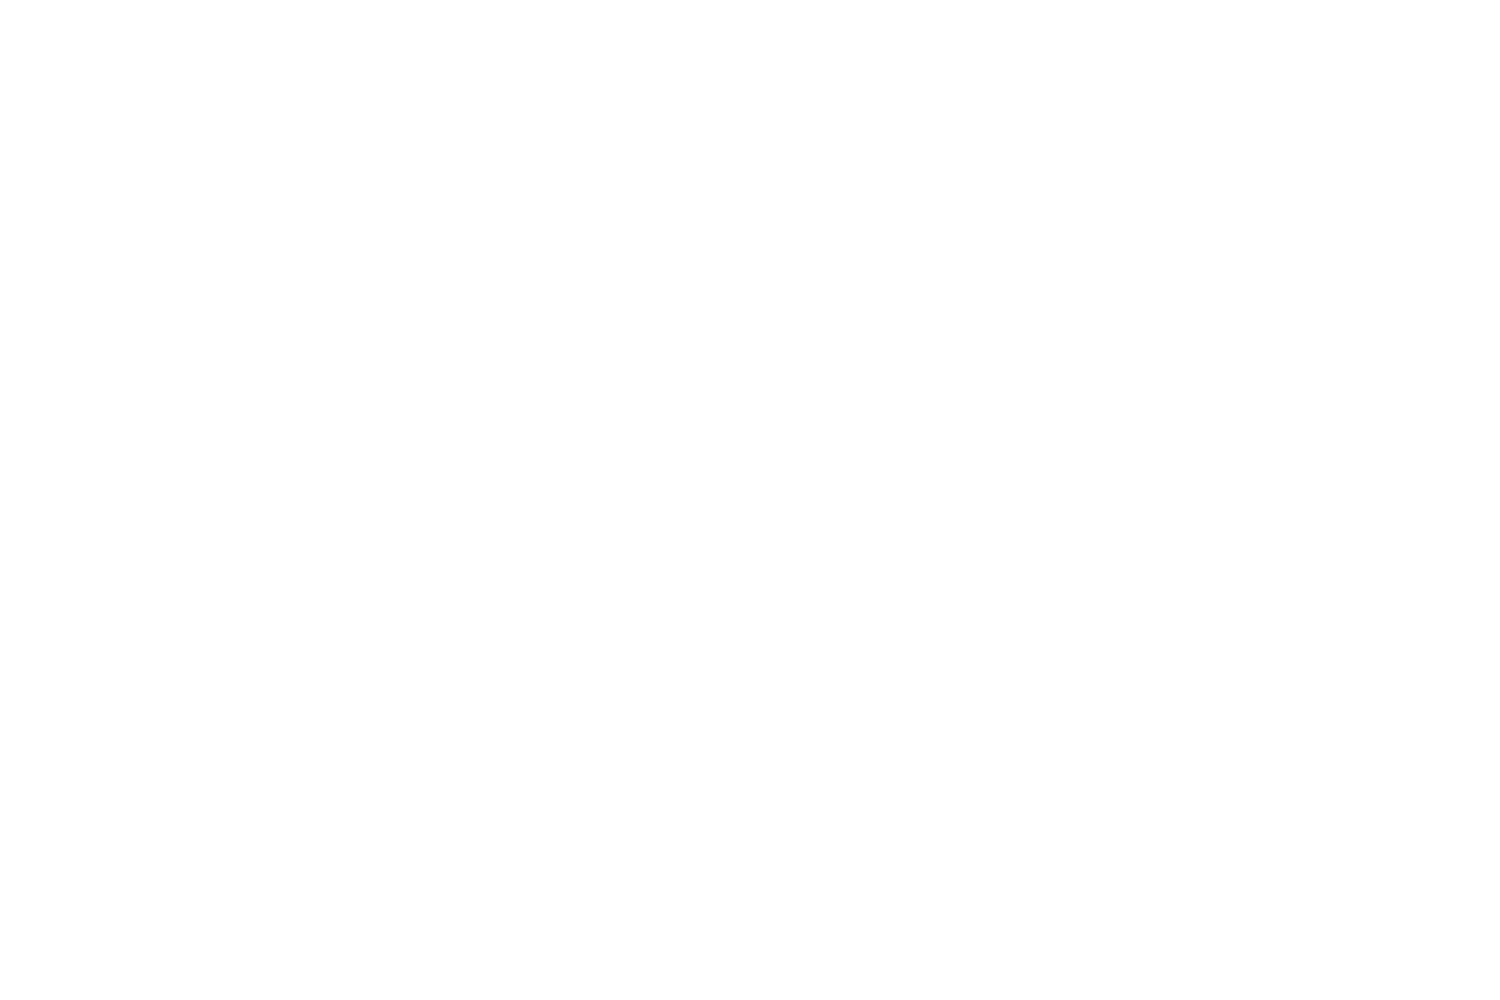 BattleBots Team Valkyrie